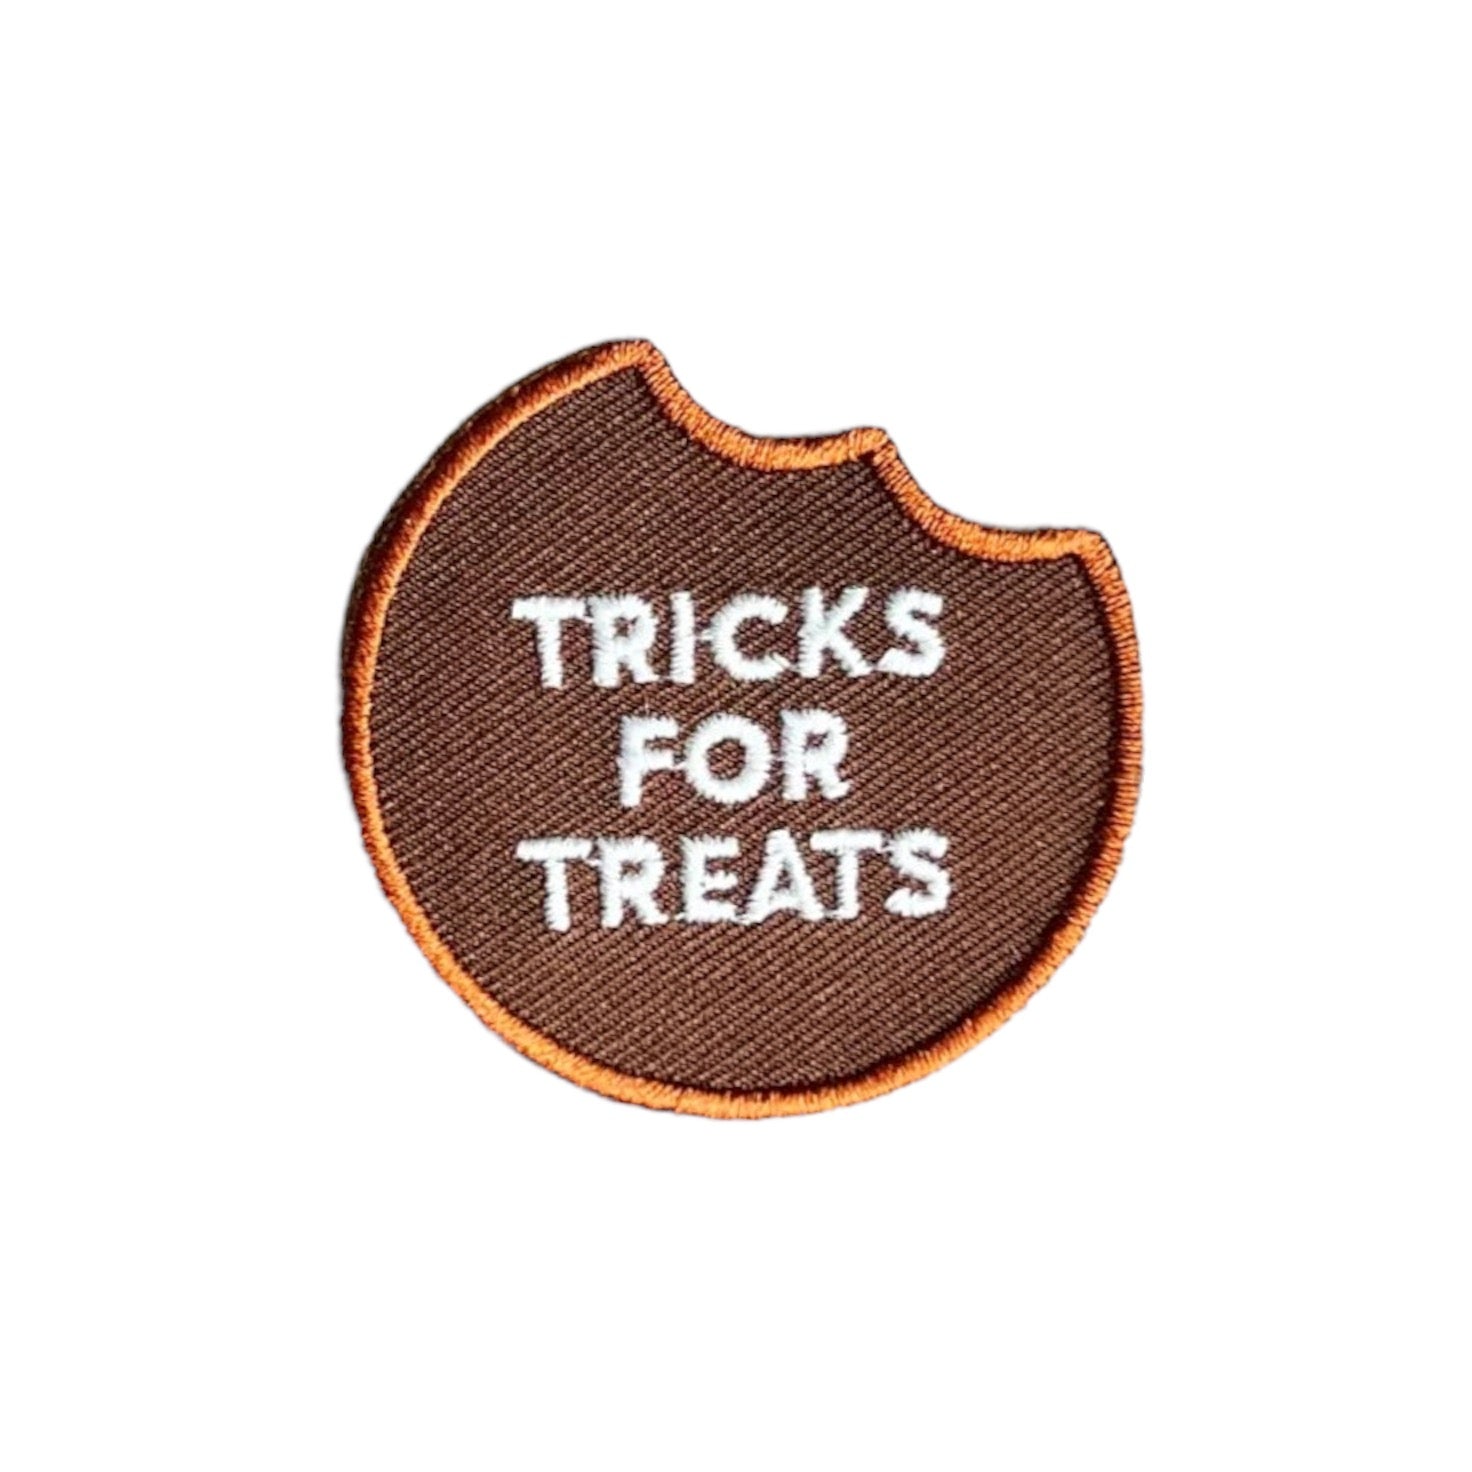 Tricks for Treats Badge